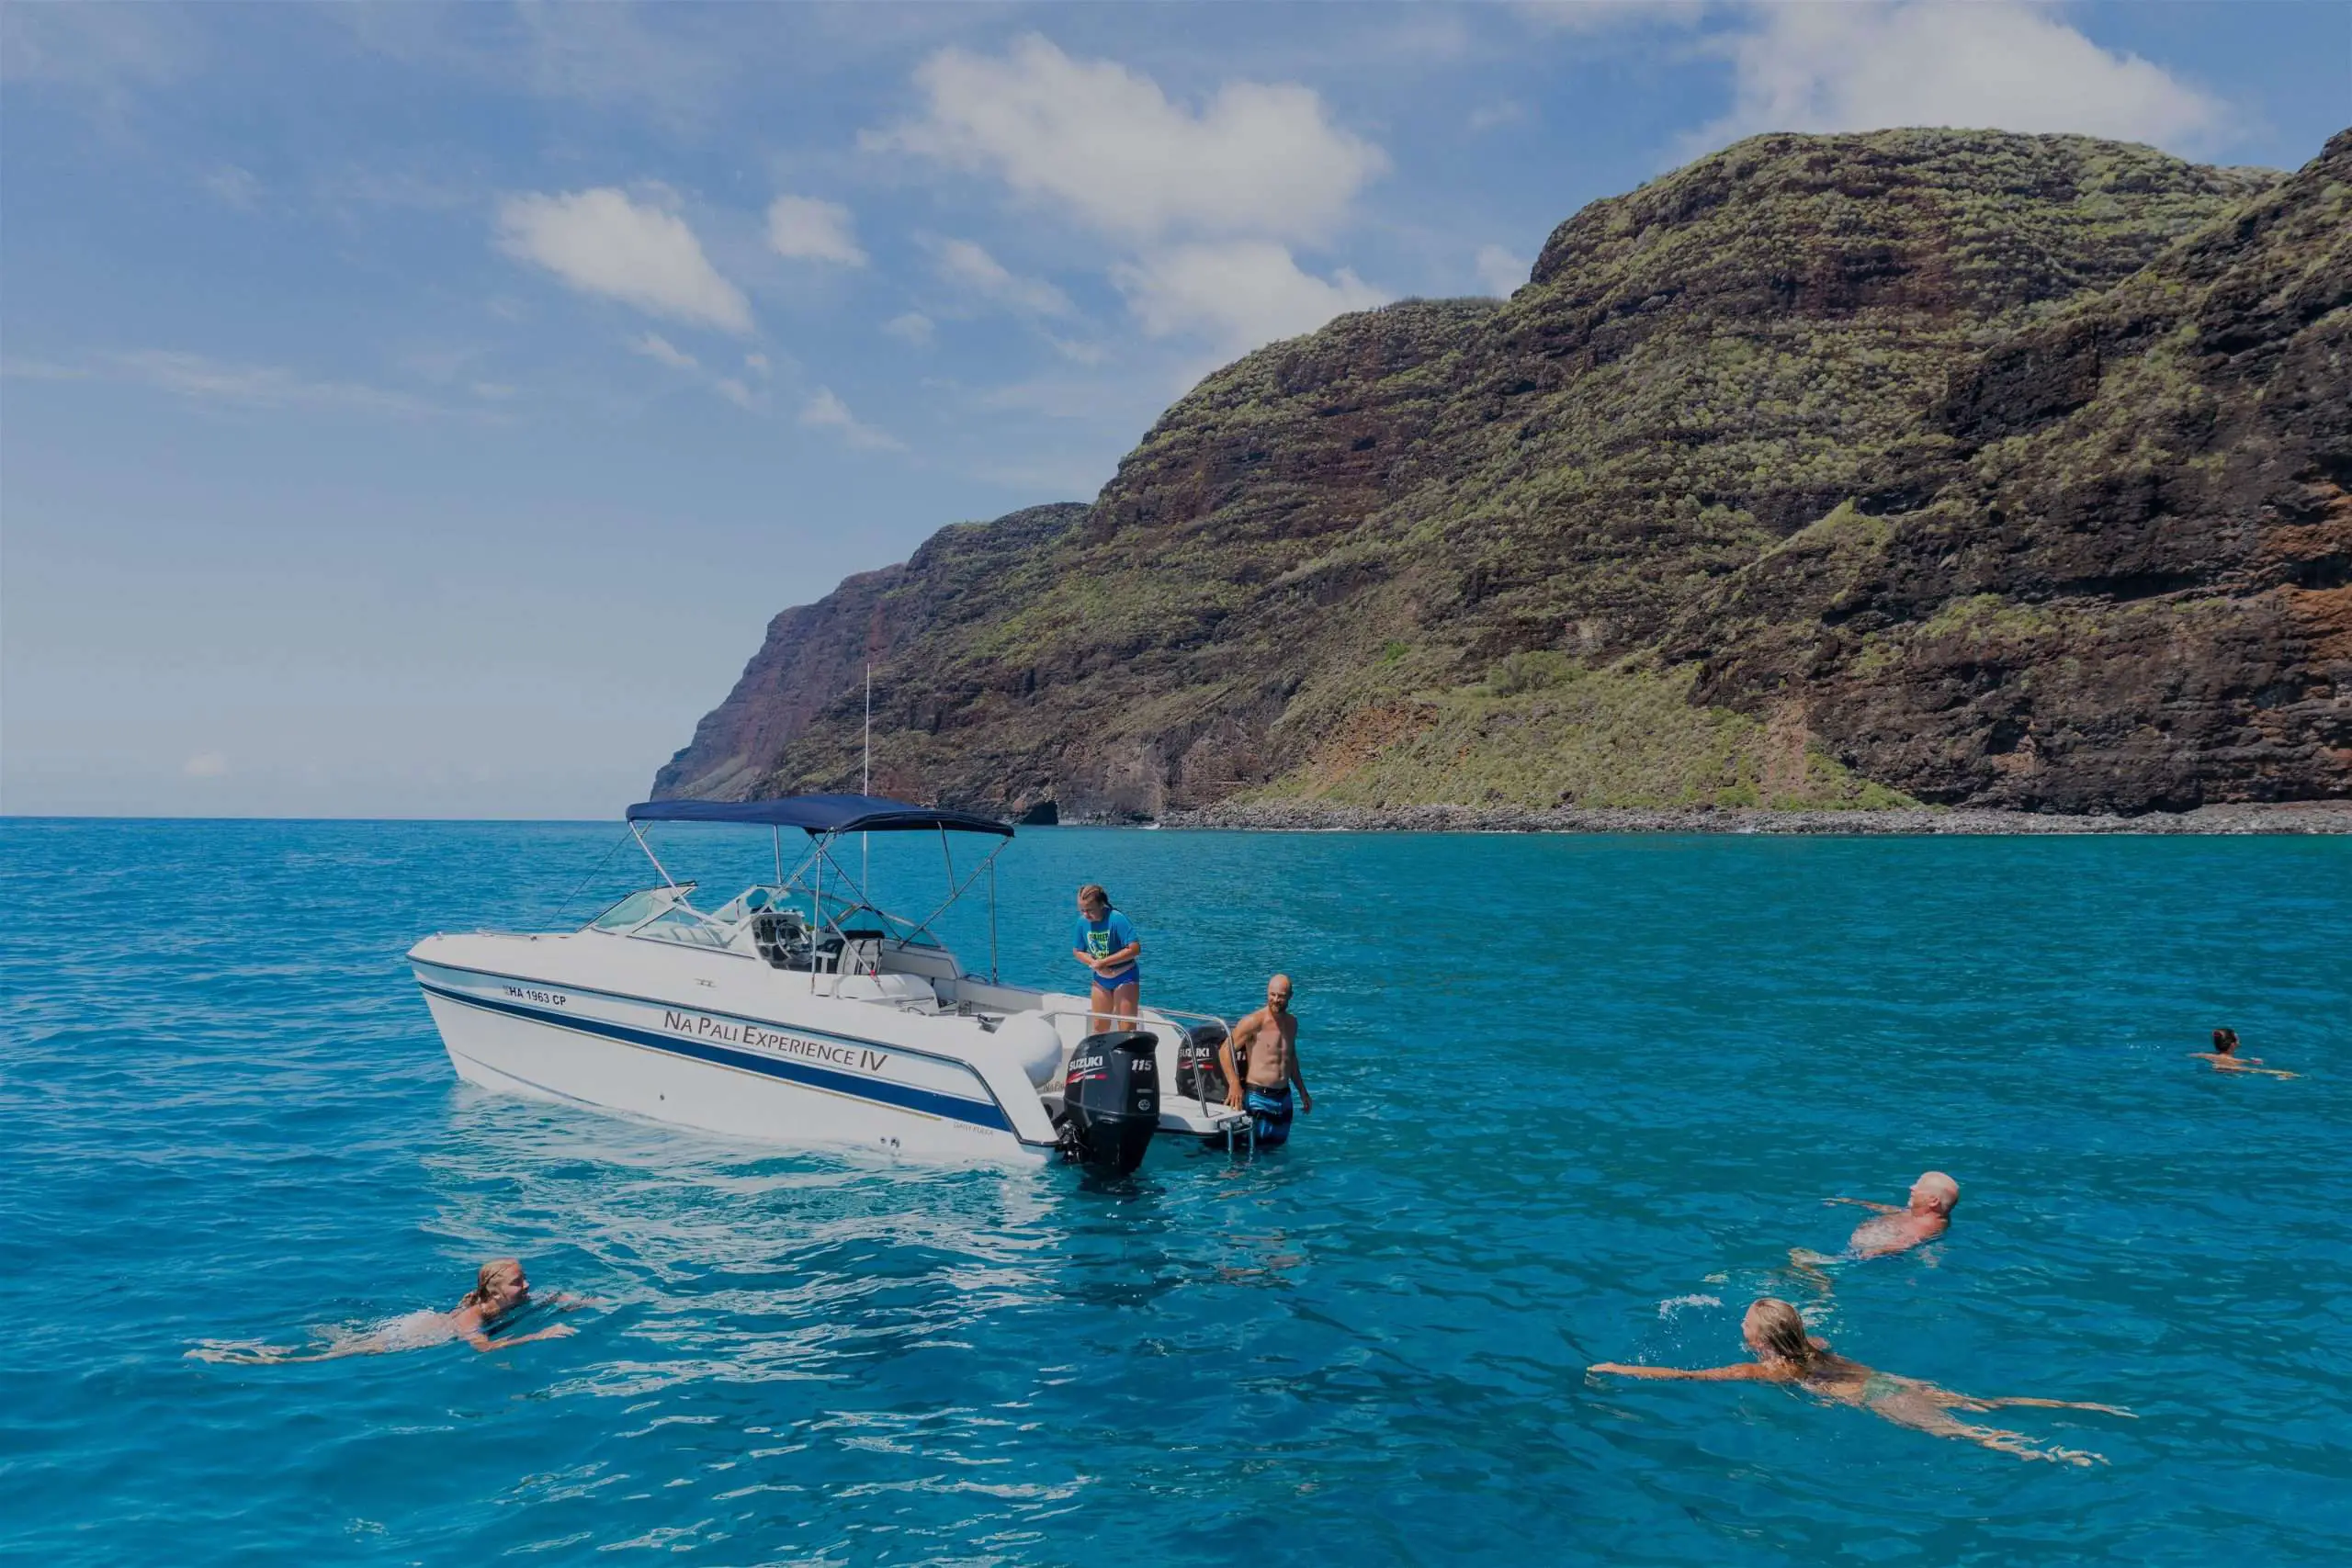 Comfortable, small catamaran boat tours of Kauai